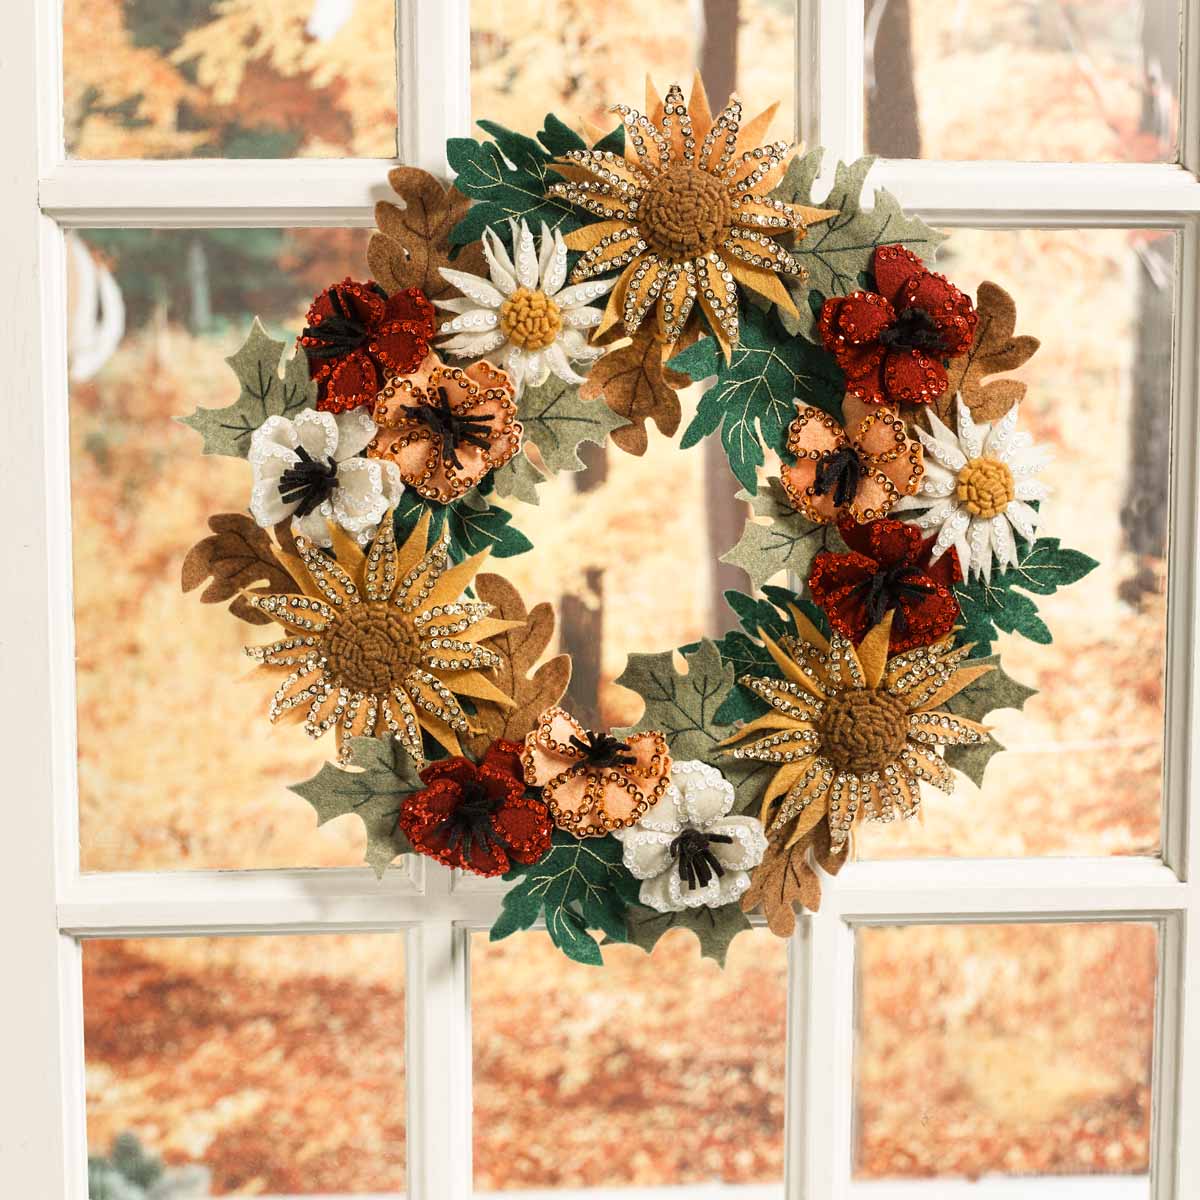 Bucilla ® Seasonal - Felt - Home Decor - Floral Fall Wreath - 89278E